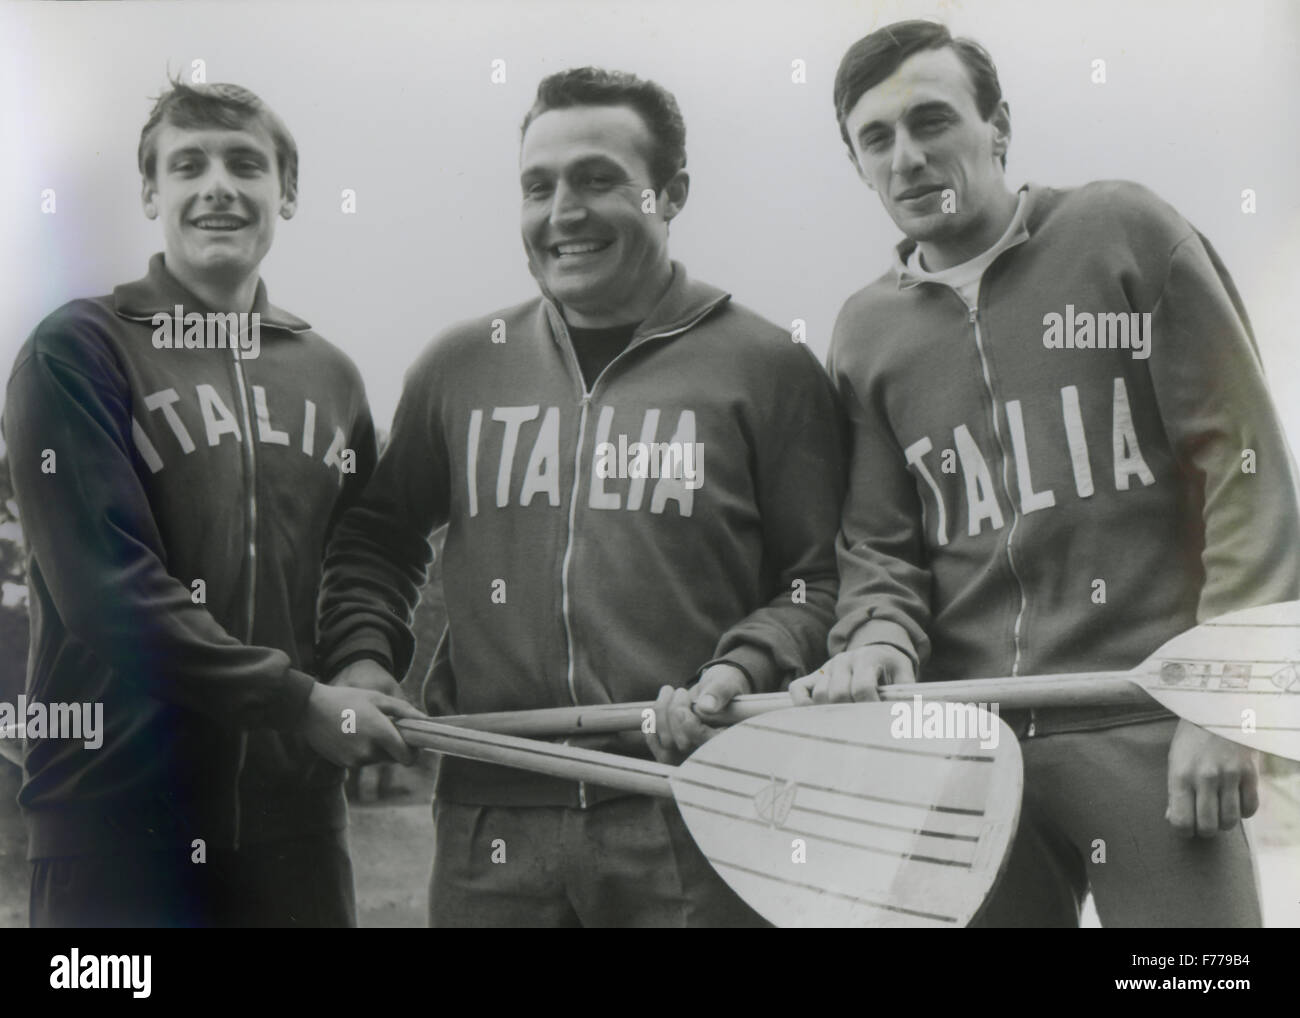 the Italian rowing team,beltrami,zilioli and Mondoni,60s Stock Photo